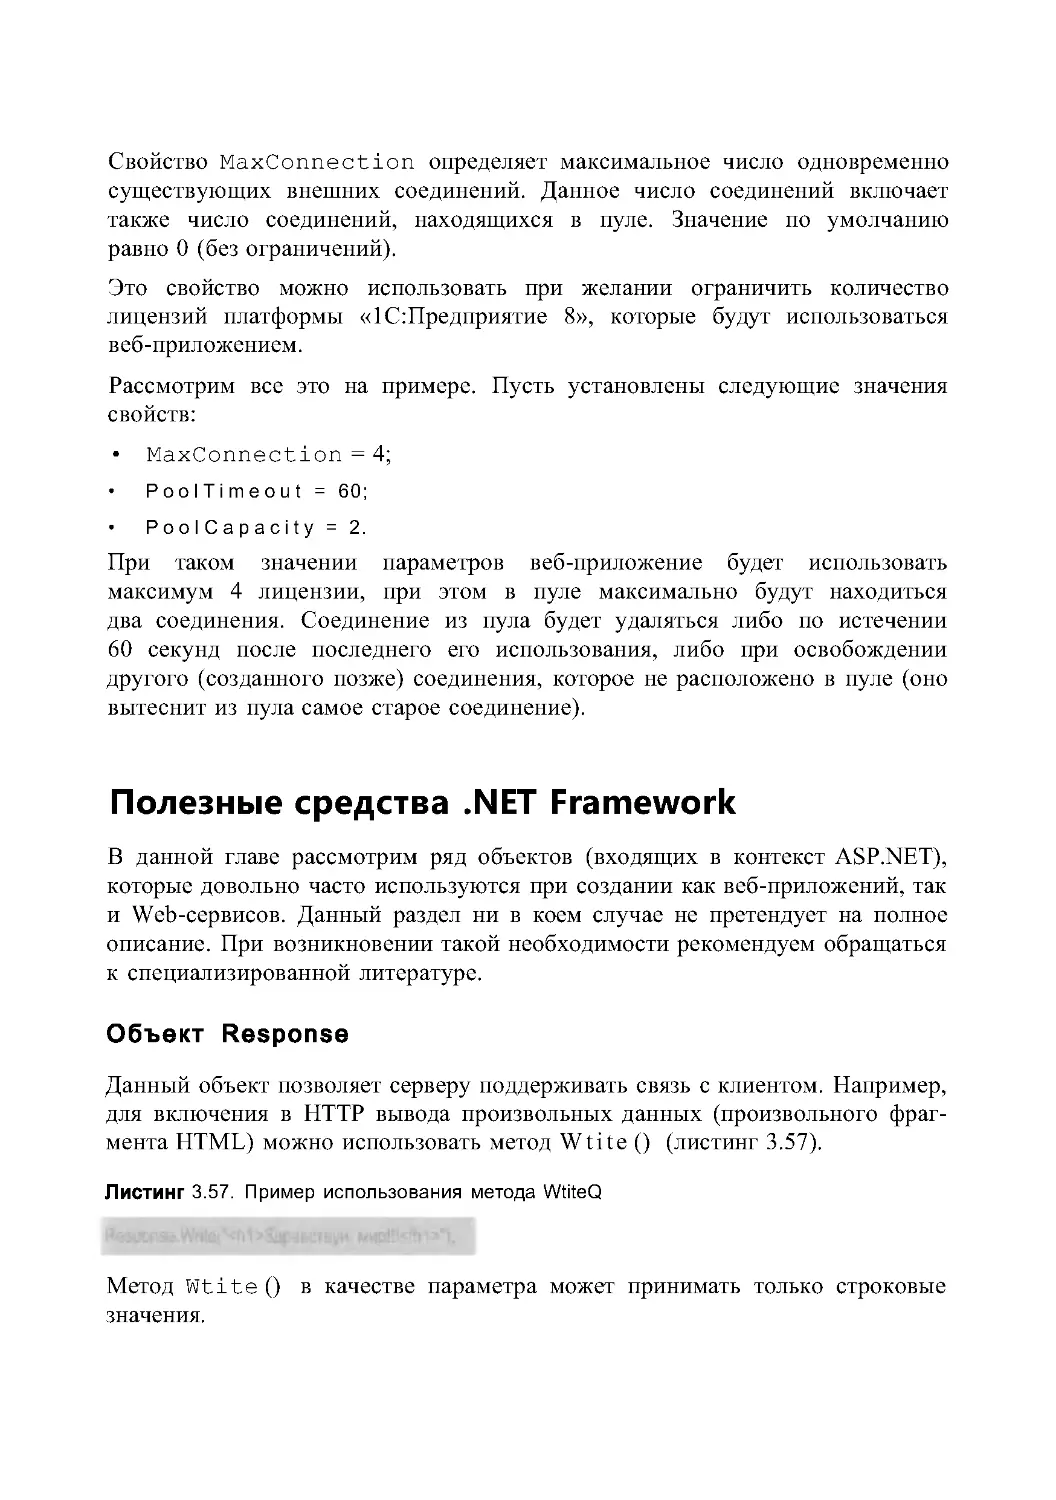 Полезные средства .NET Framework